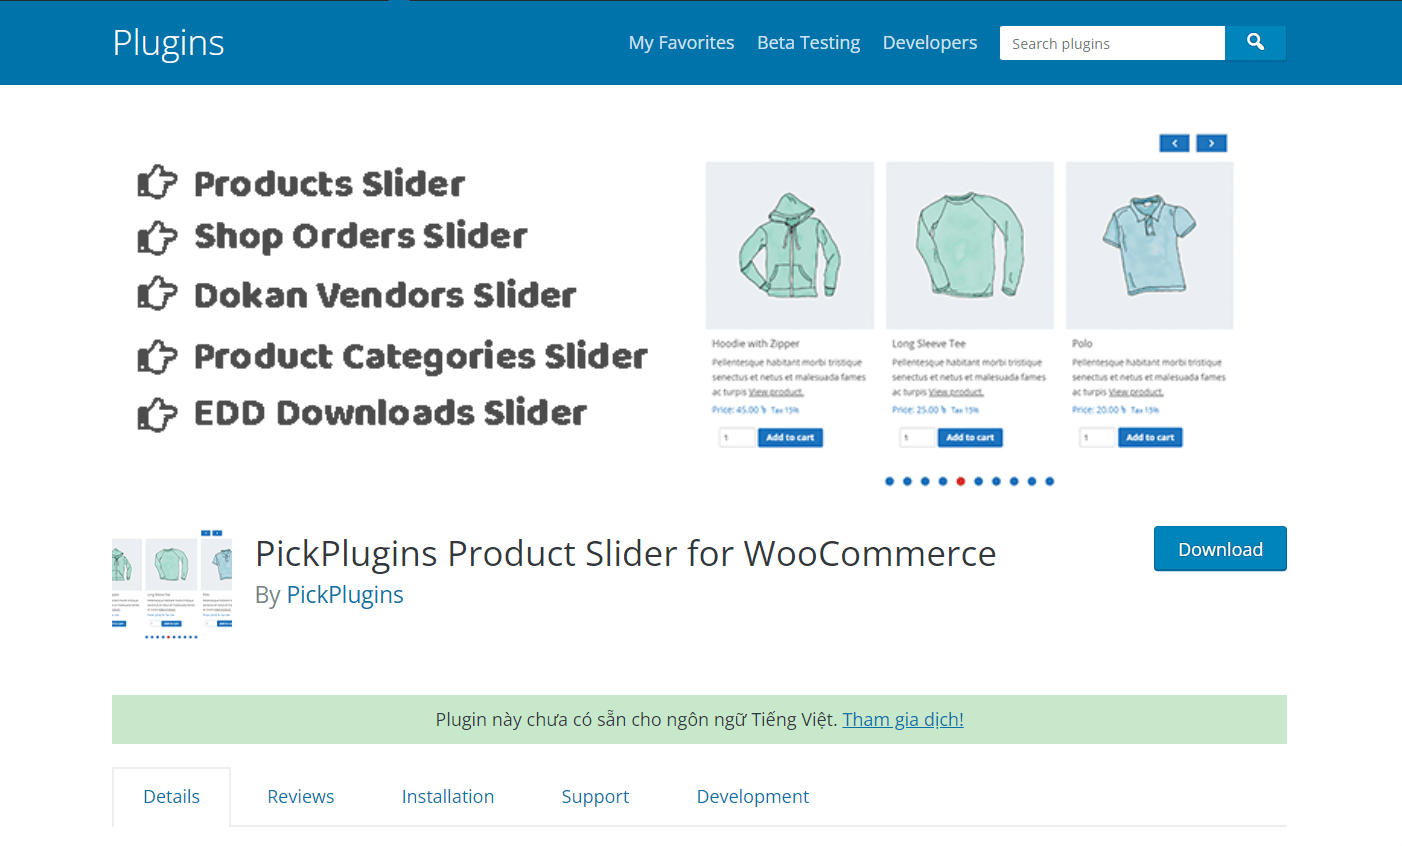 PickPlugins Product Slider for WooCommerce